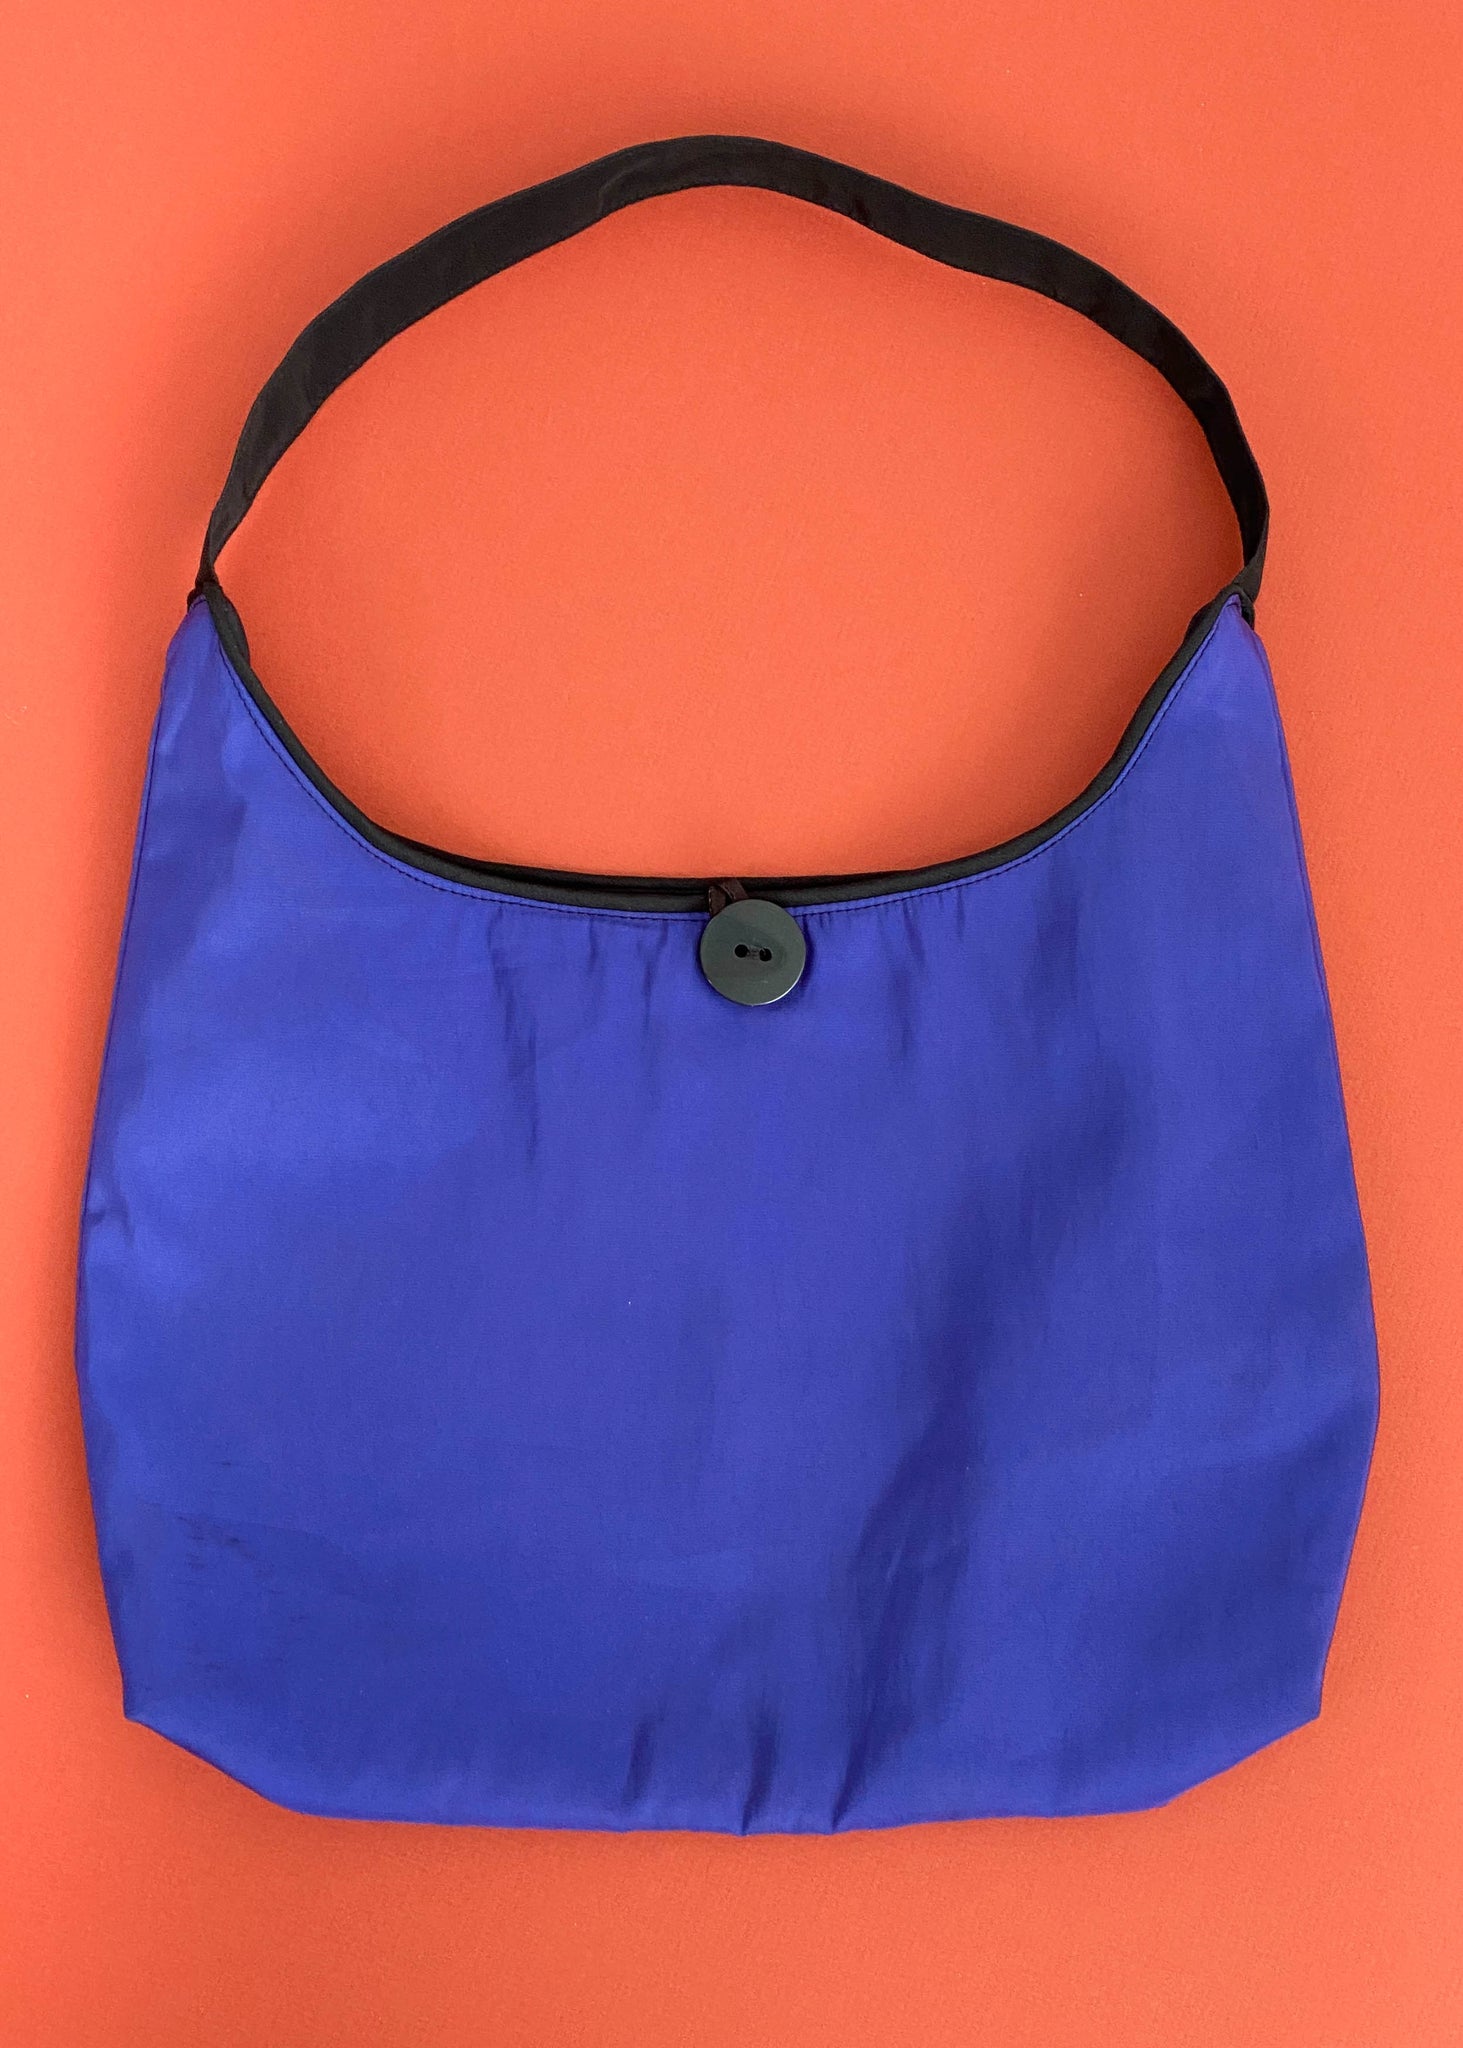 Button Blue Mini Bag